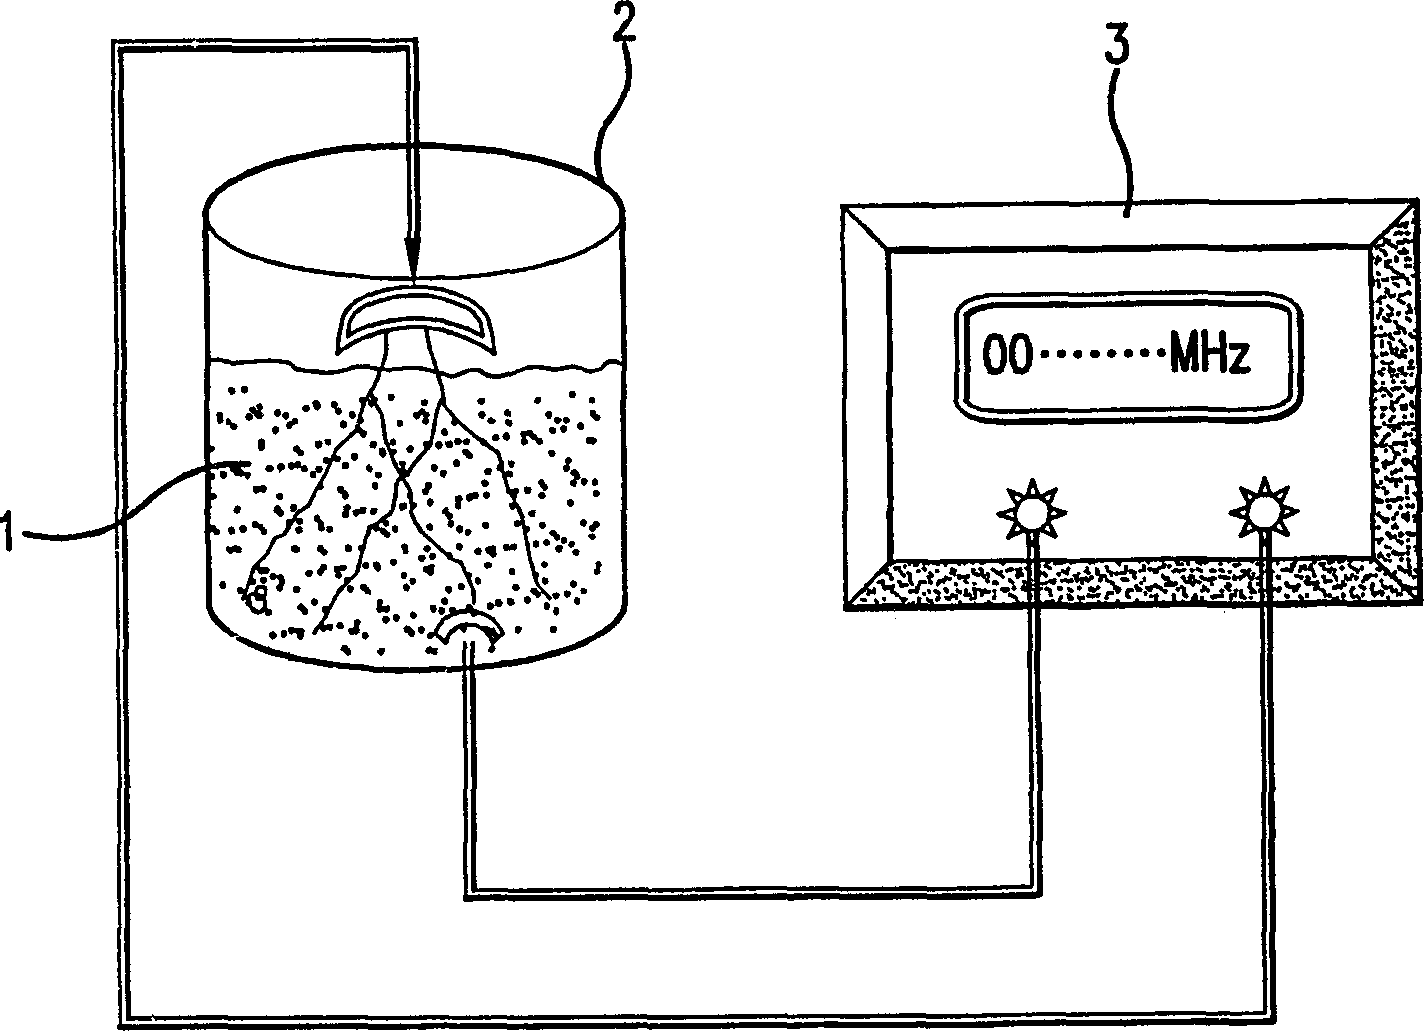 A biological fertilizer based on yeasts